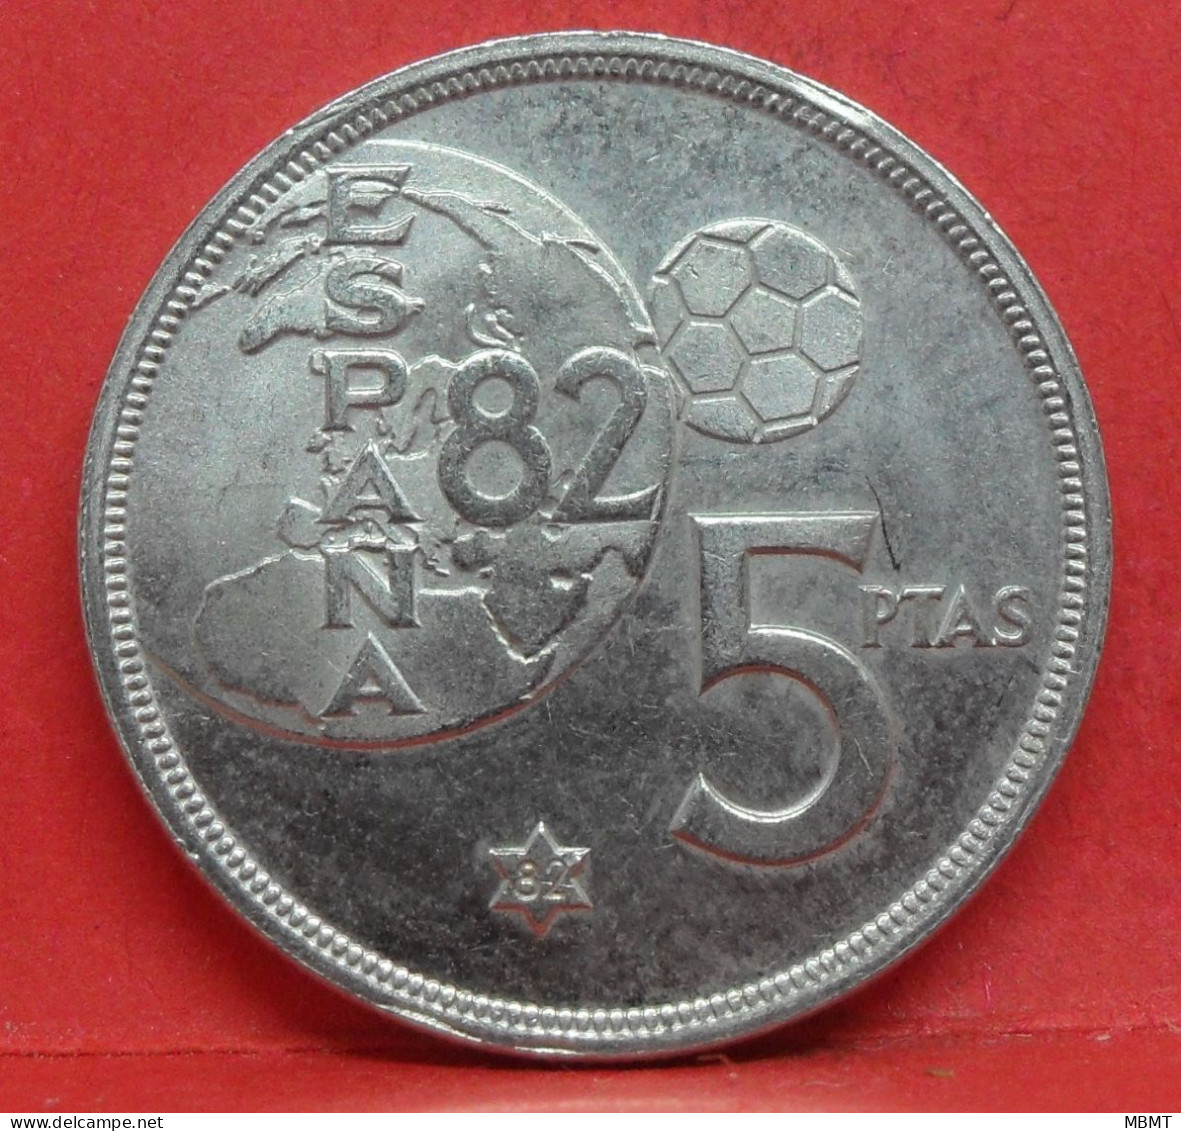 5 Pesetas 1980 étoile 82 - SUP - Pièce Monnaie Espagne - Article N°2384 - 5 Pesetas